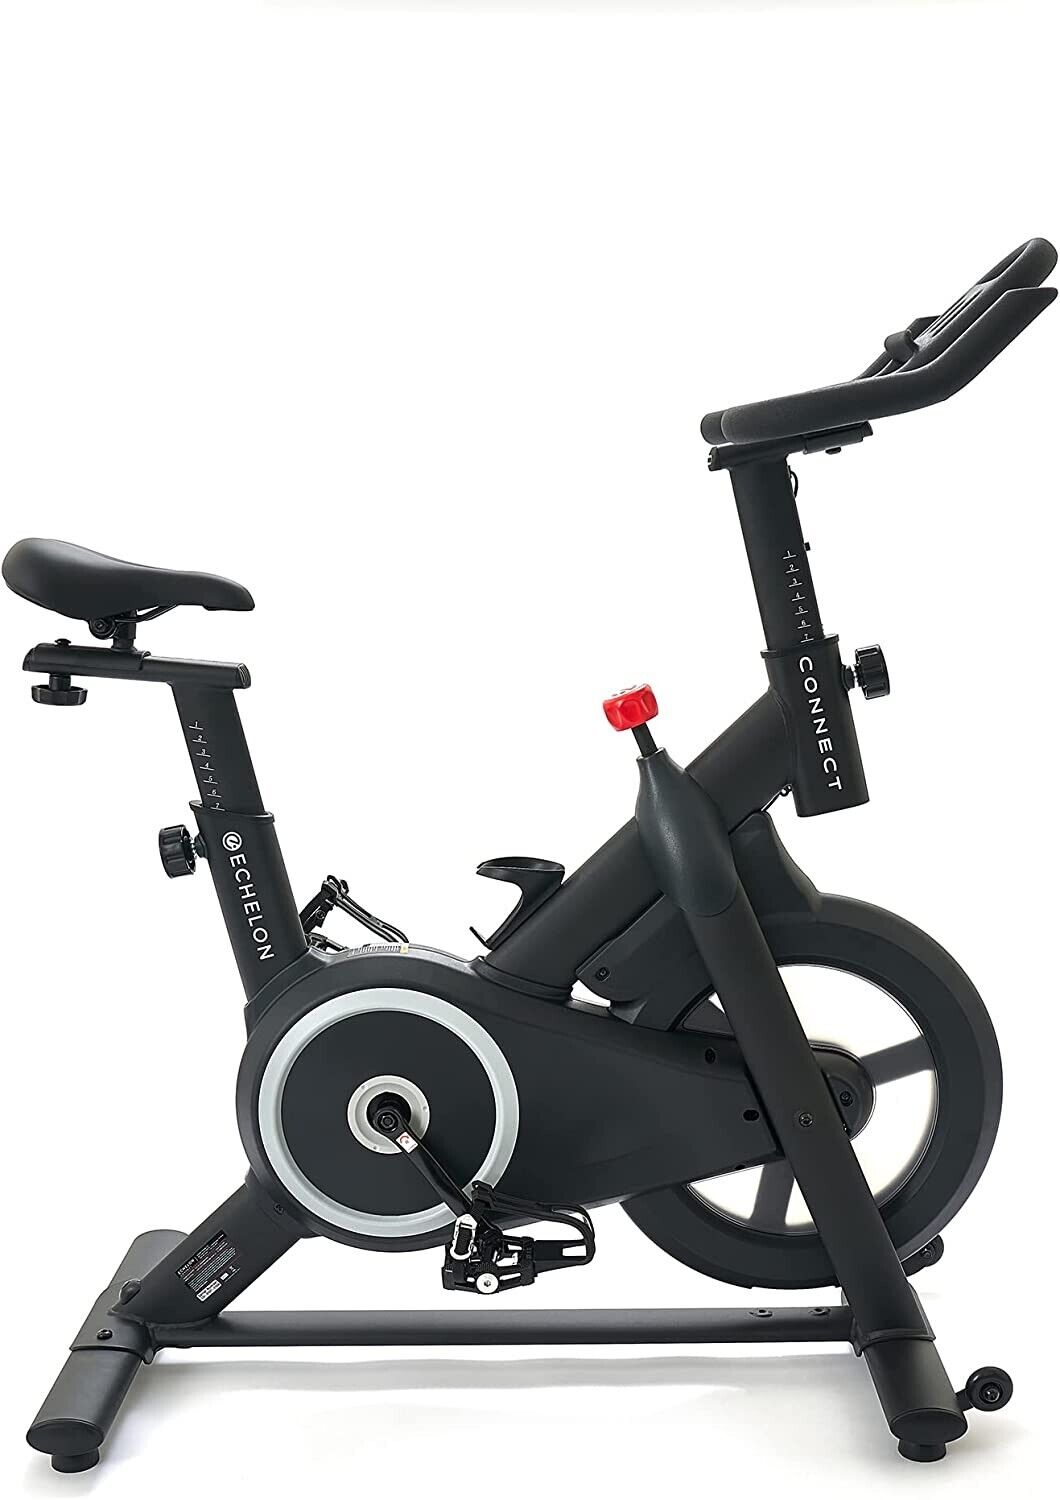 Echelon EX-15 Exercise Bike - indoor cycling workout